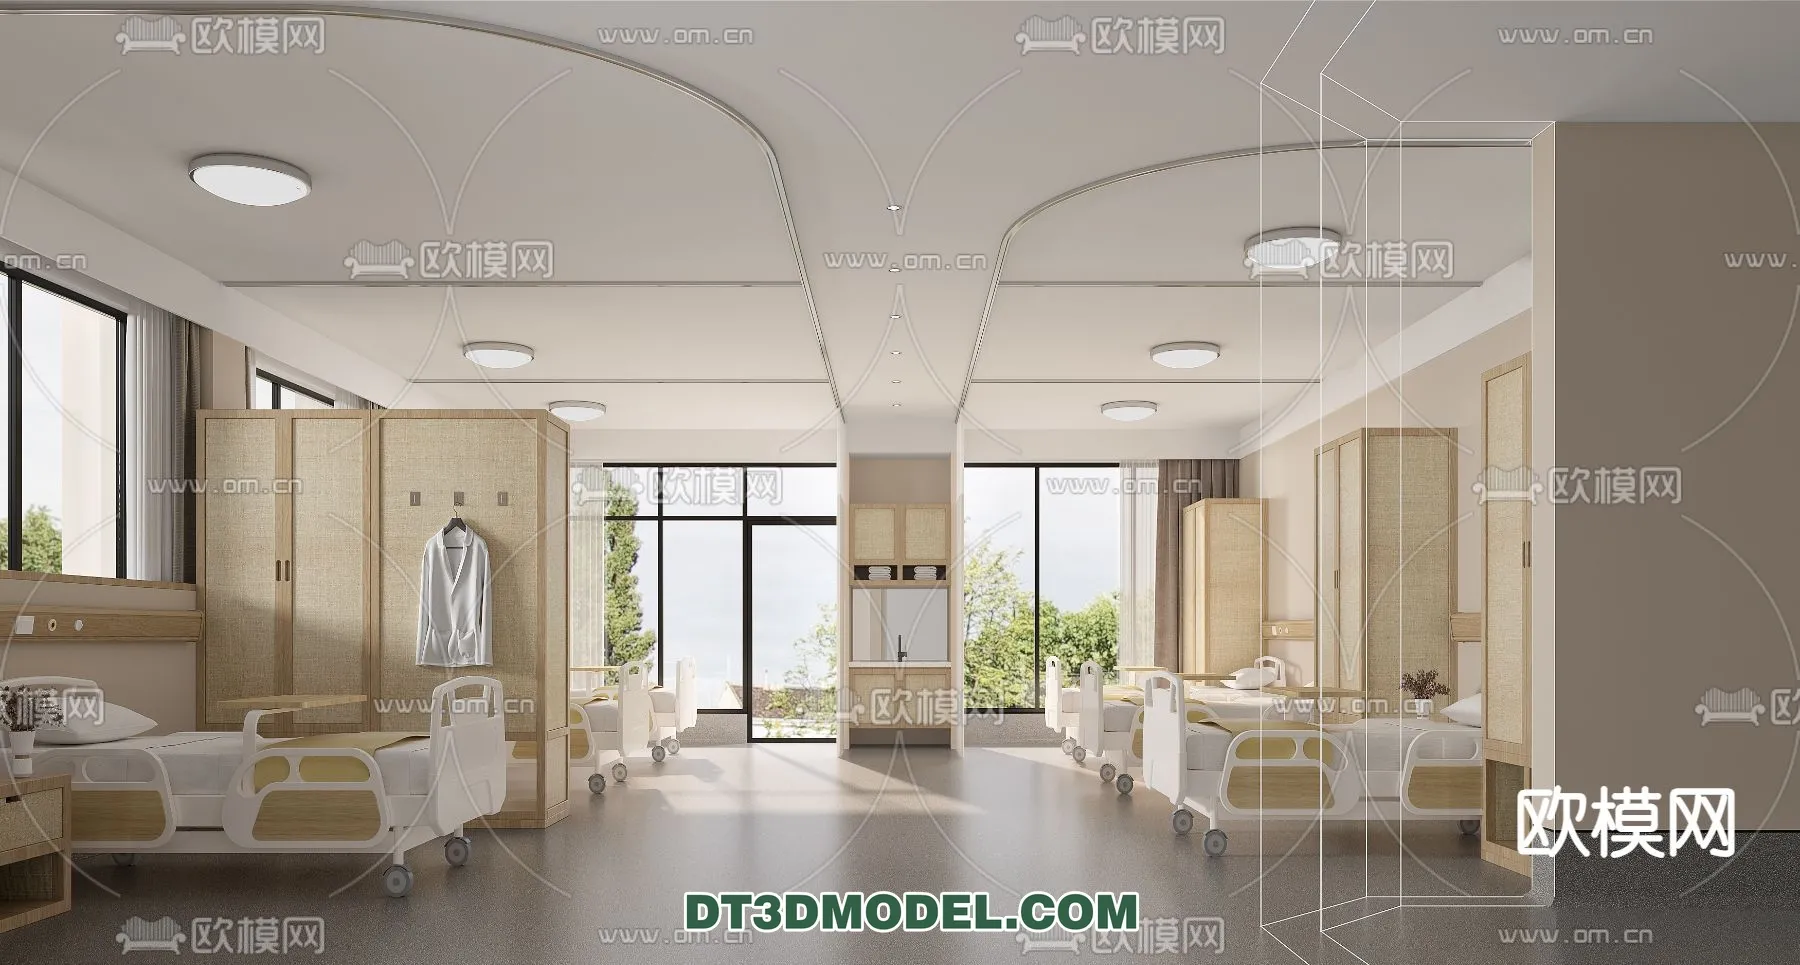 HOSPITAL 3D SCENES – MODERN – 0186